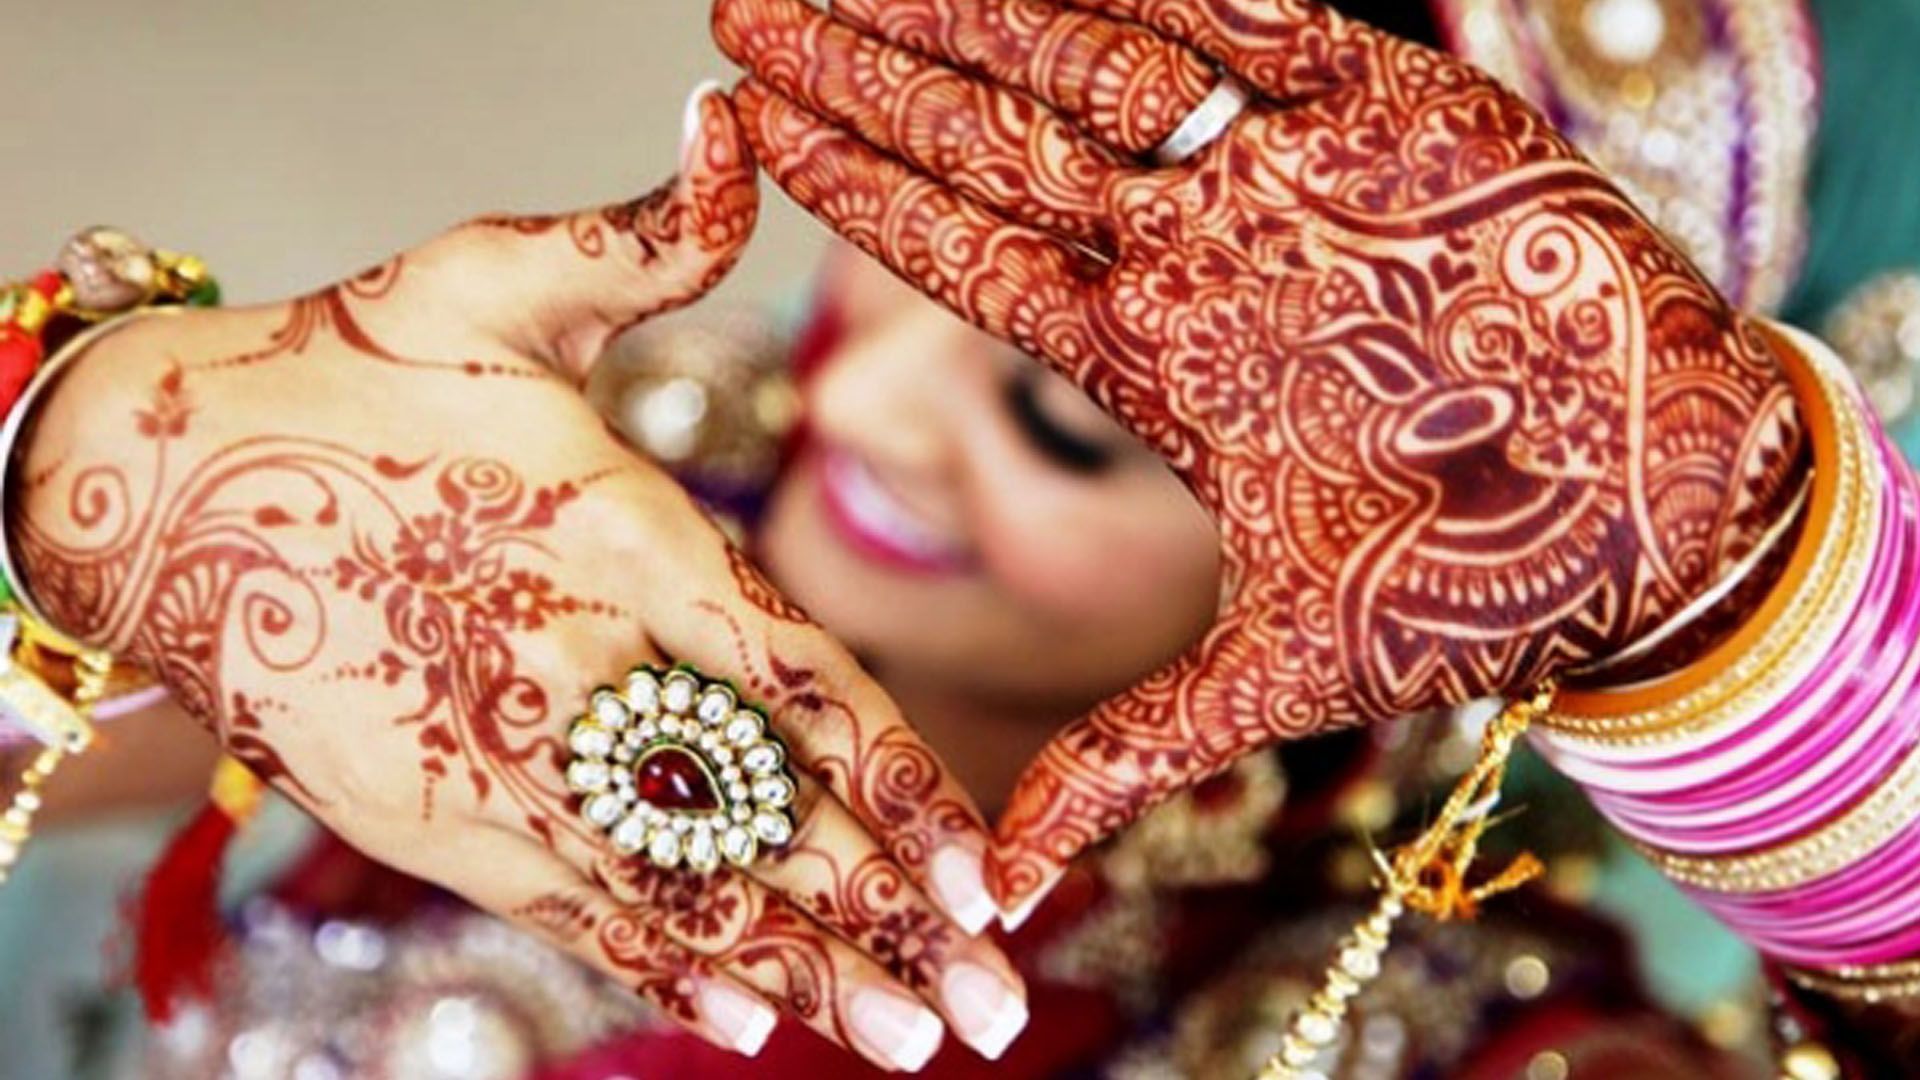 Indian Wedding Wallpaper Free .wallpaperaccess.com